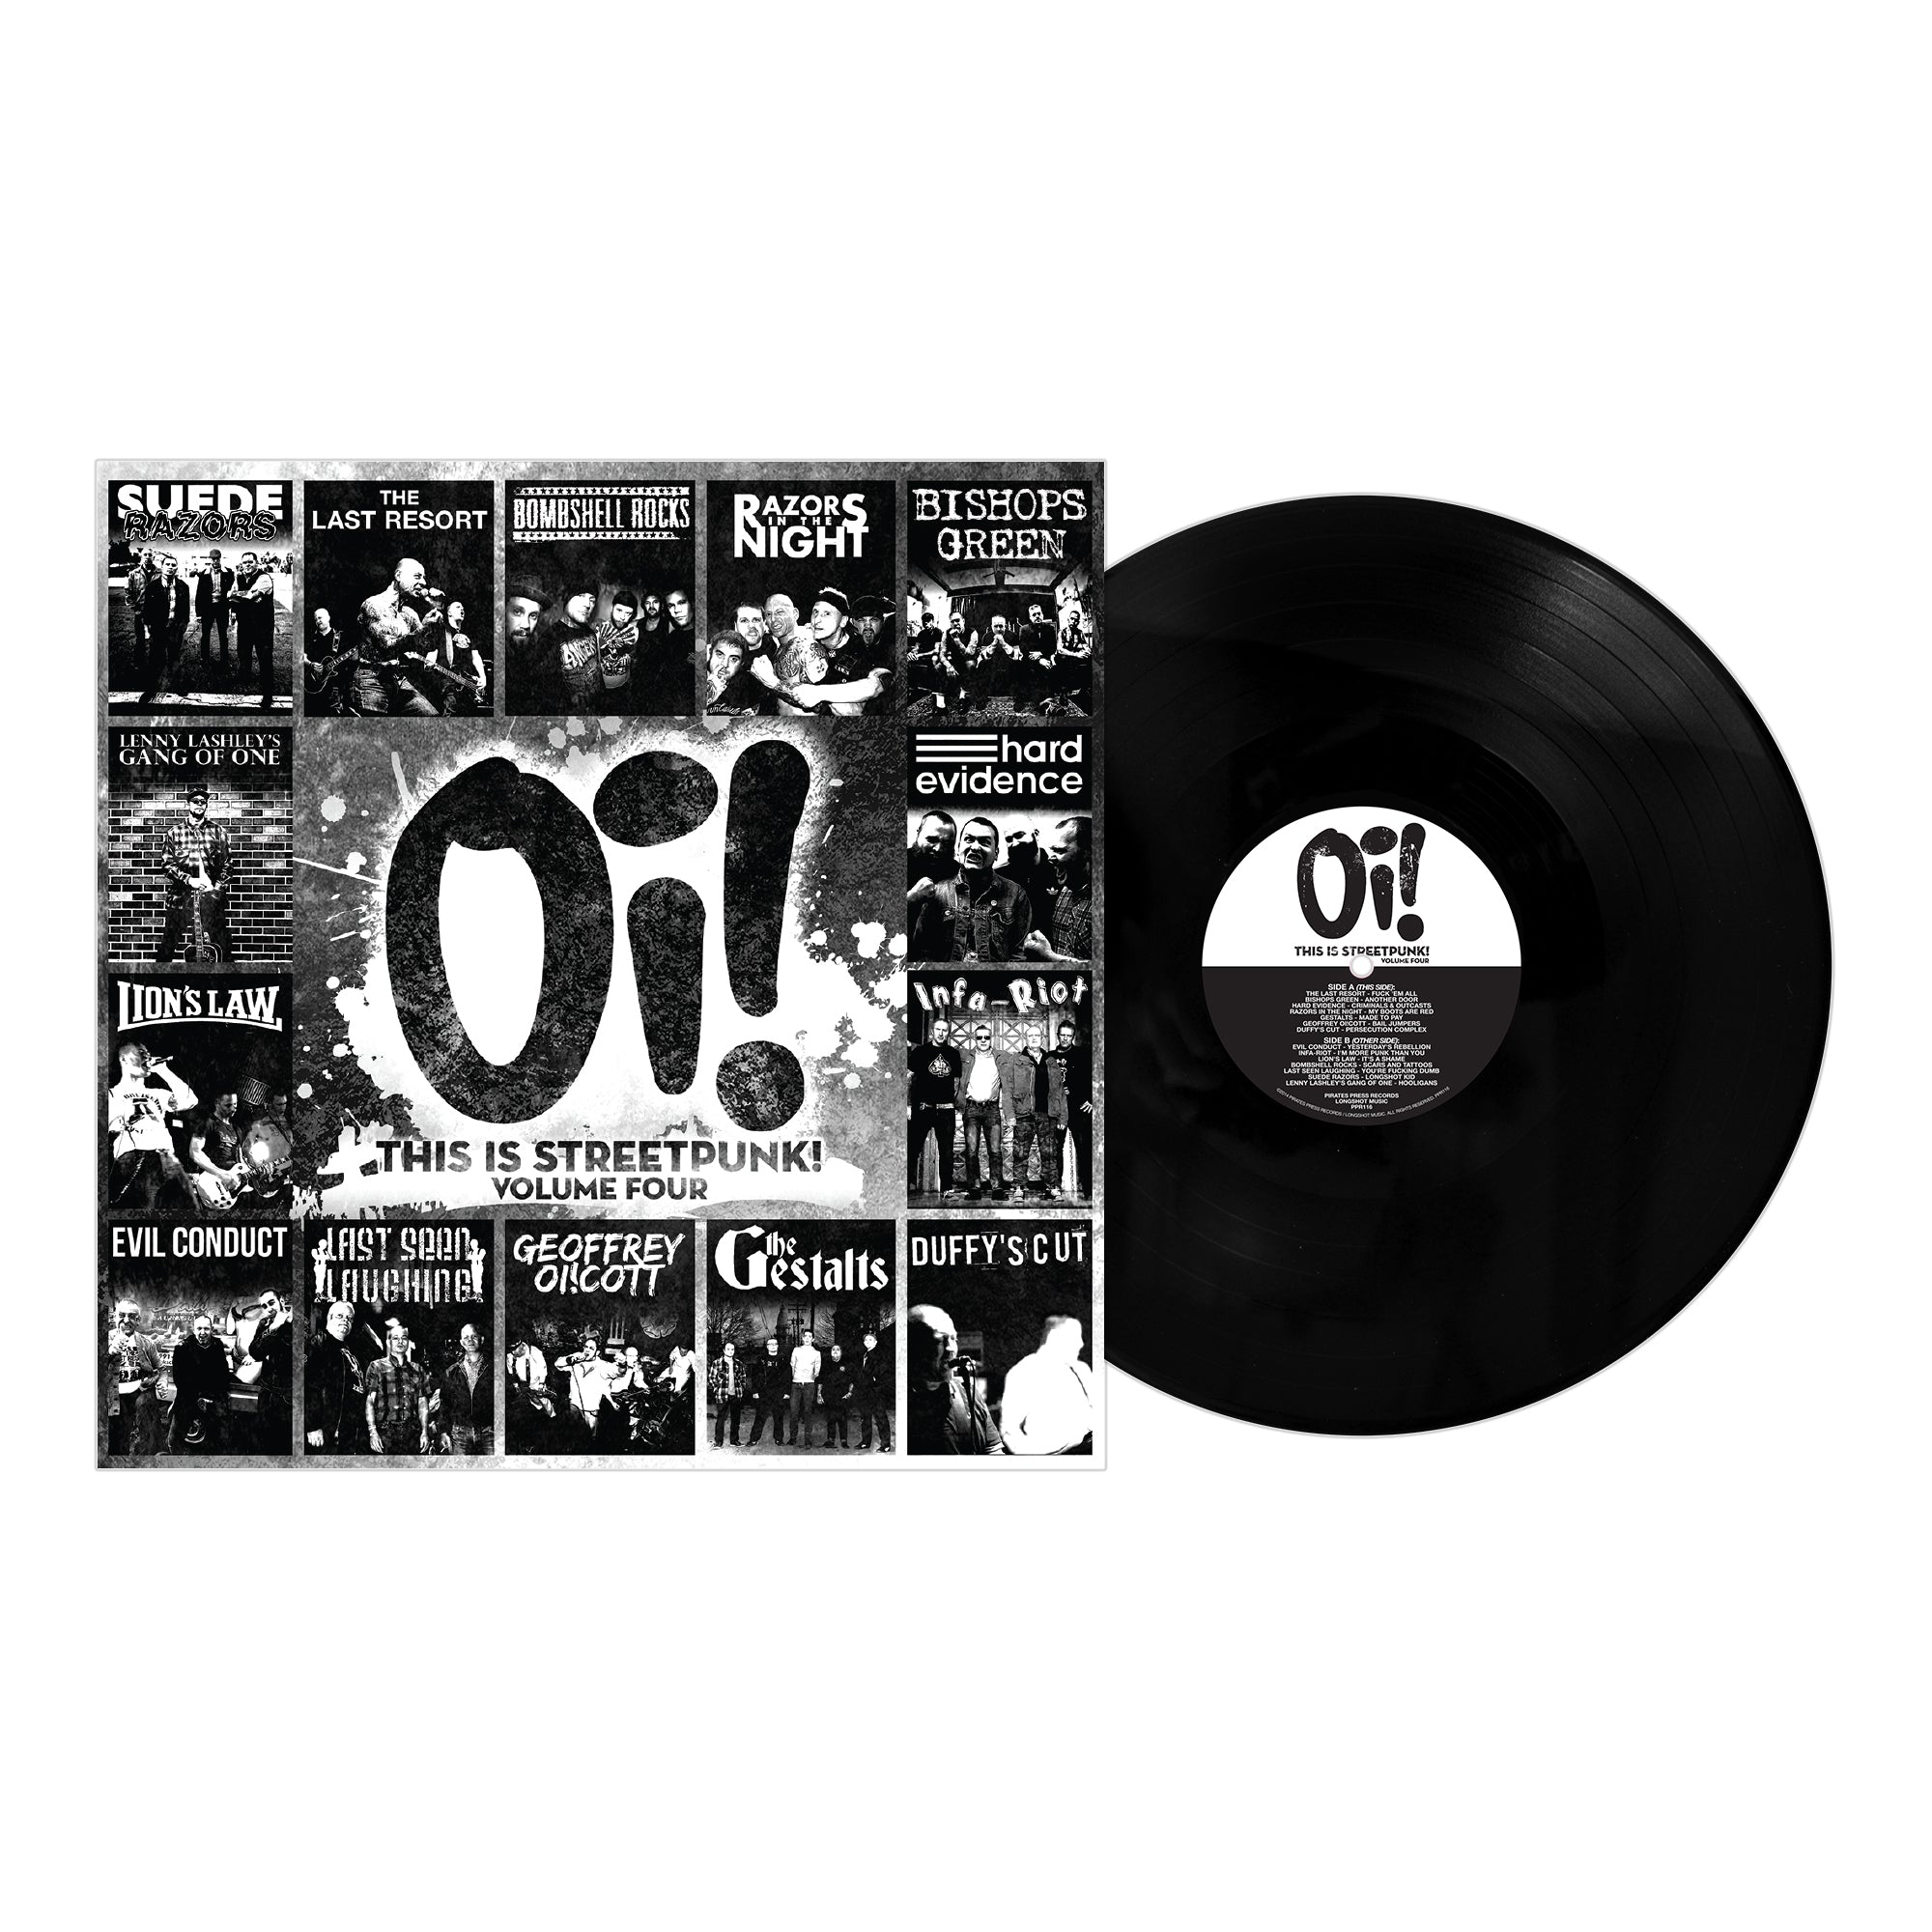 Pirates Press - Oi! This Is Streetpunk! Vol 4 - Black - Vinyl LP